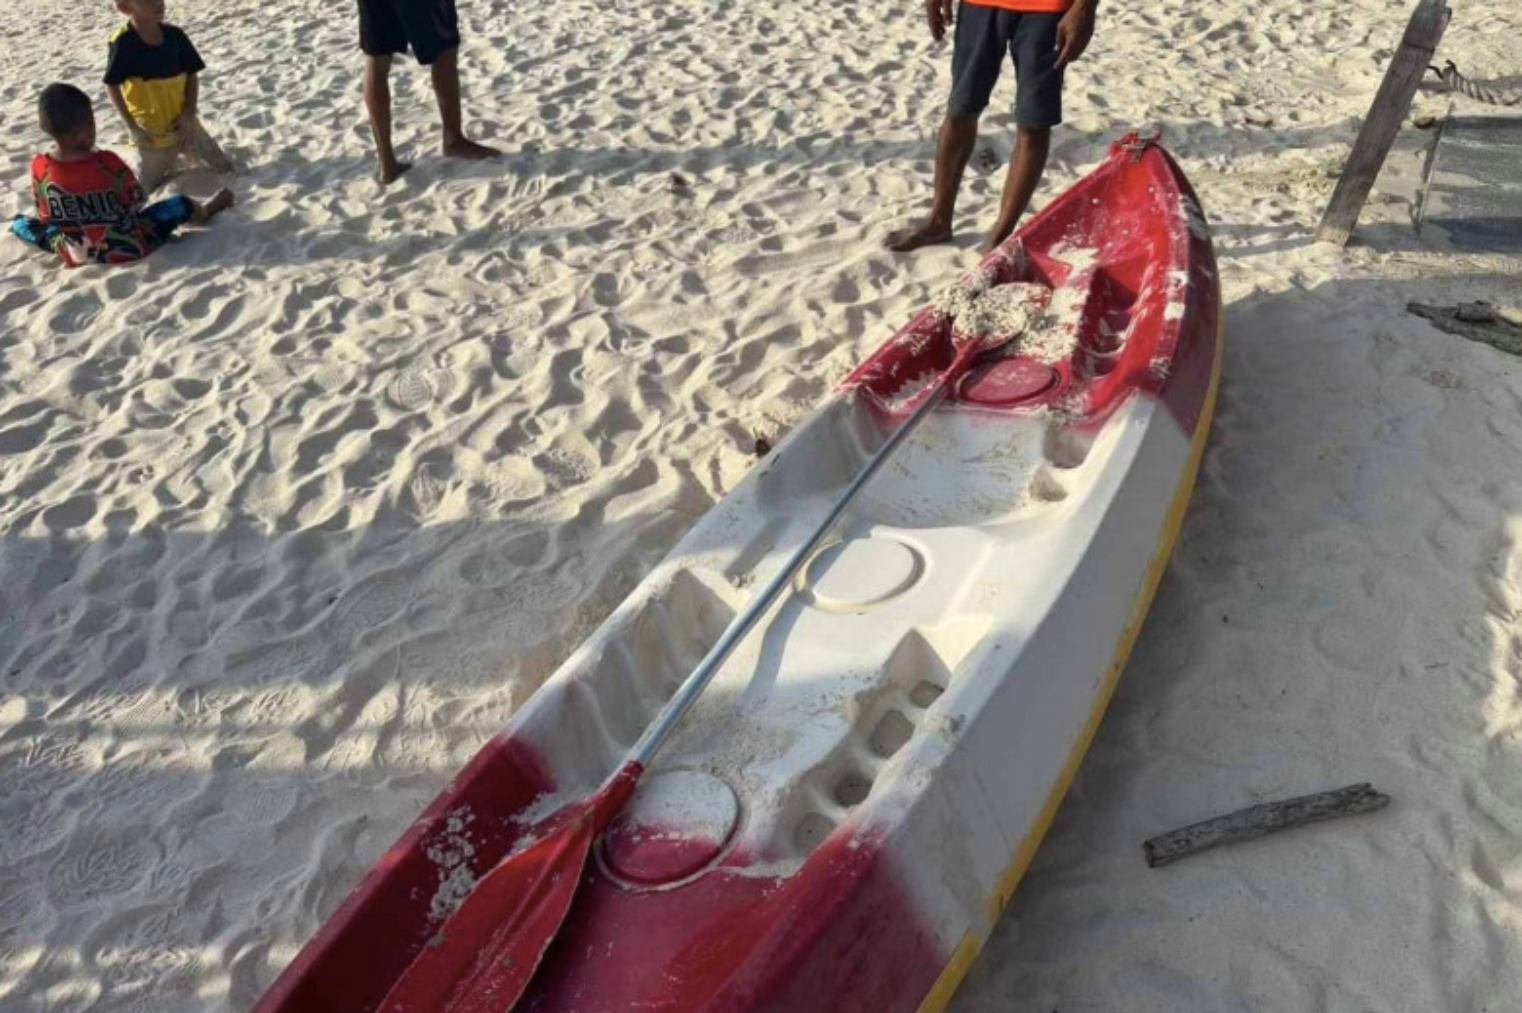 Canoa que, presuntamente, adquirió Daniel Sancho para deshacerse del cadáver. Foto: ‘Bangkok Post’